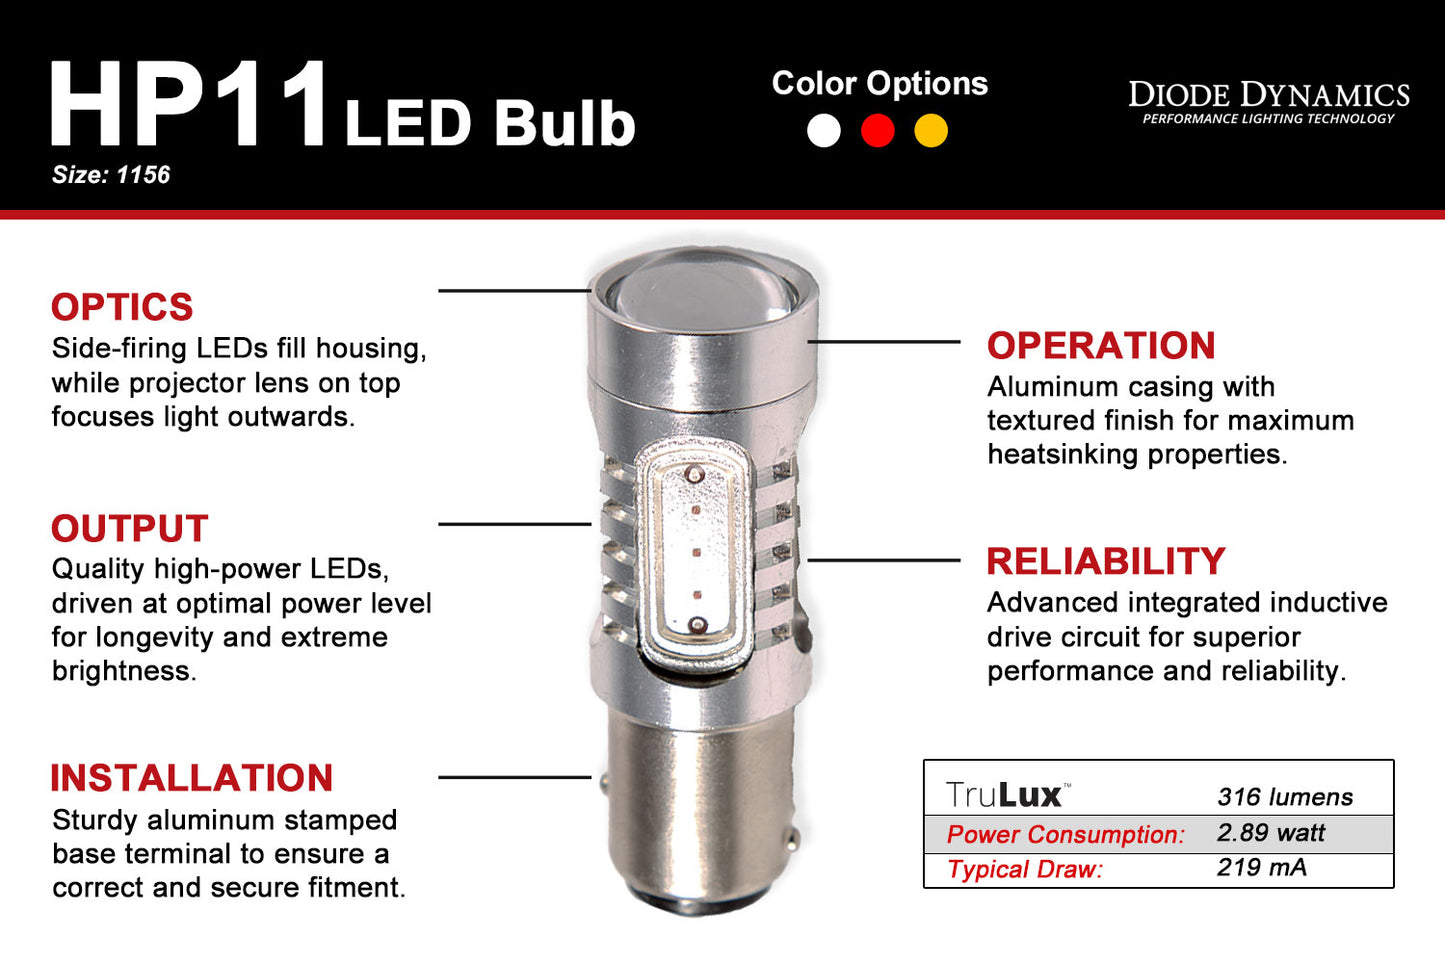 1156 LED Bulb HP11 LED Red Single Diode Dynamics